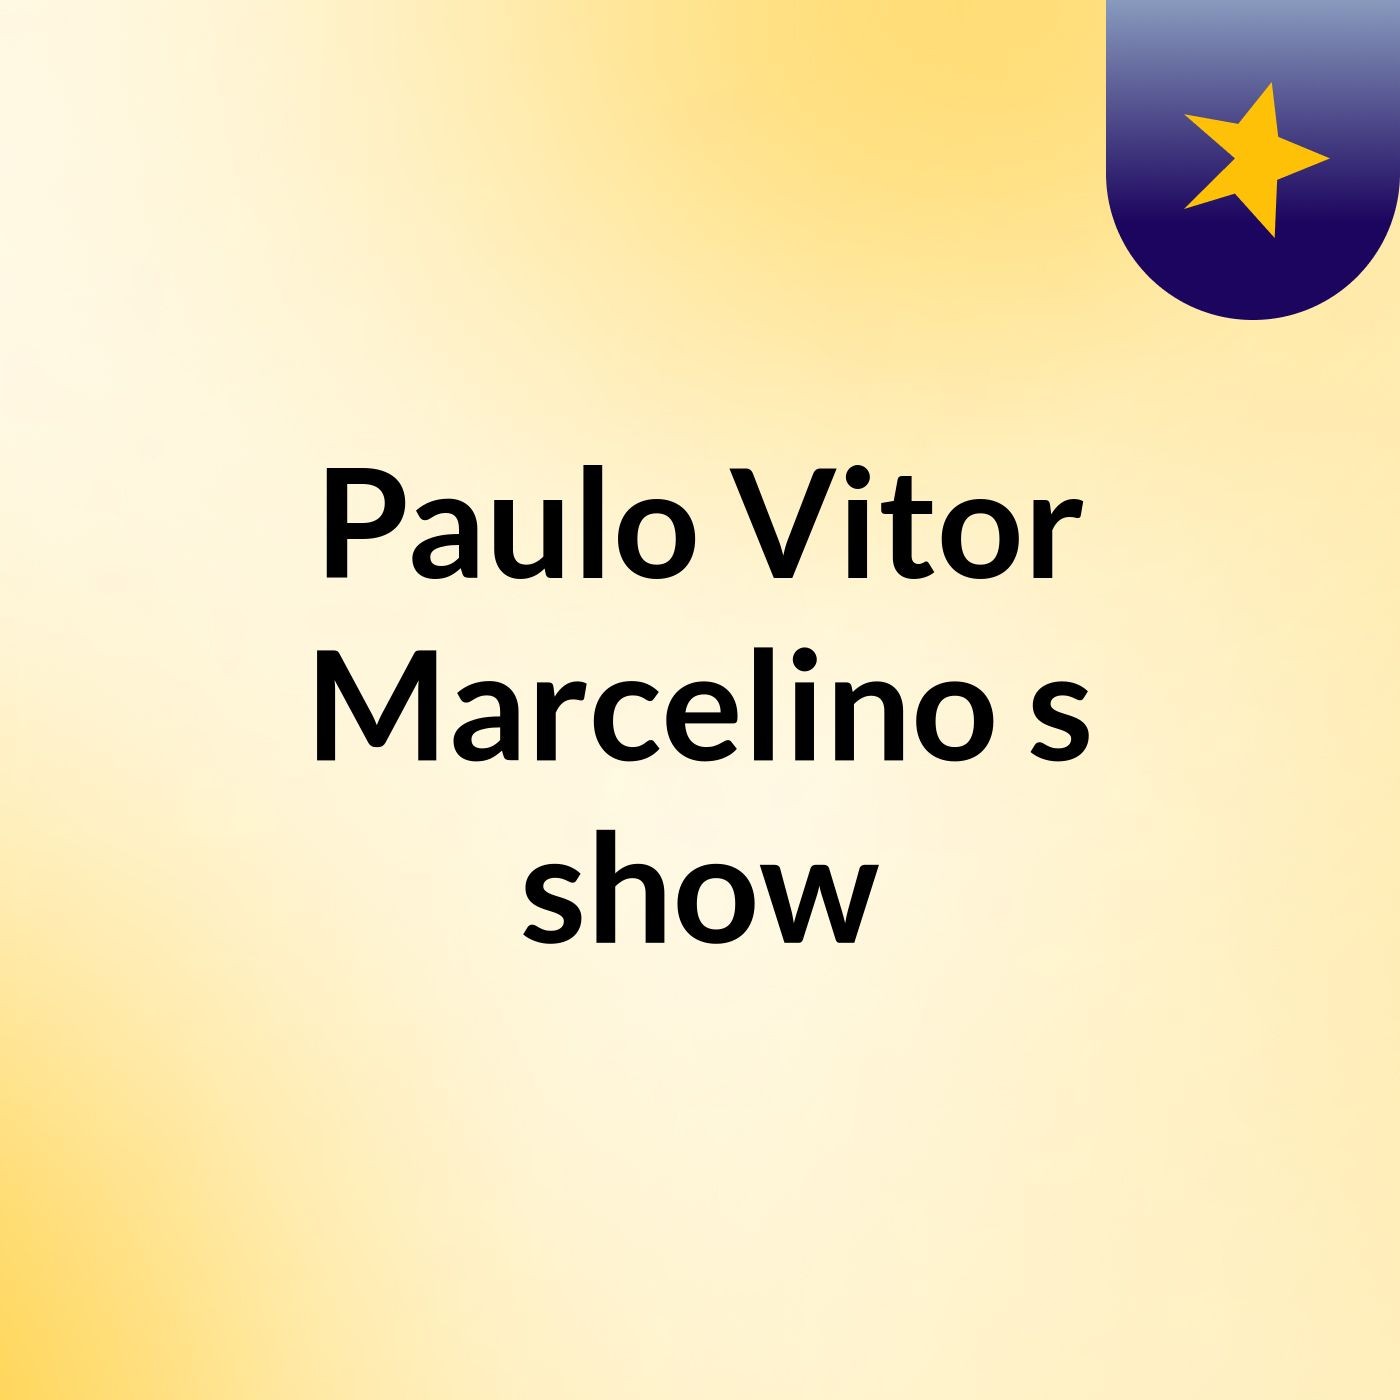 Paulo Vitor Marcelino's show